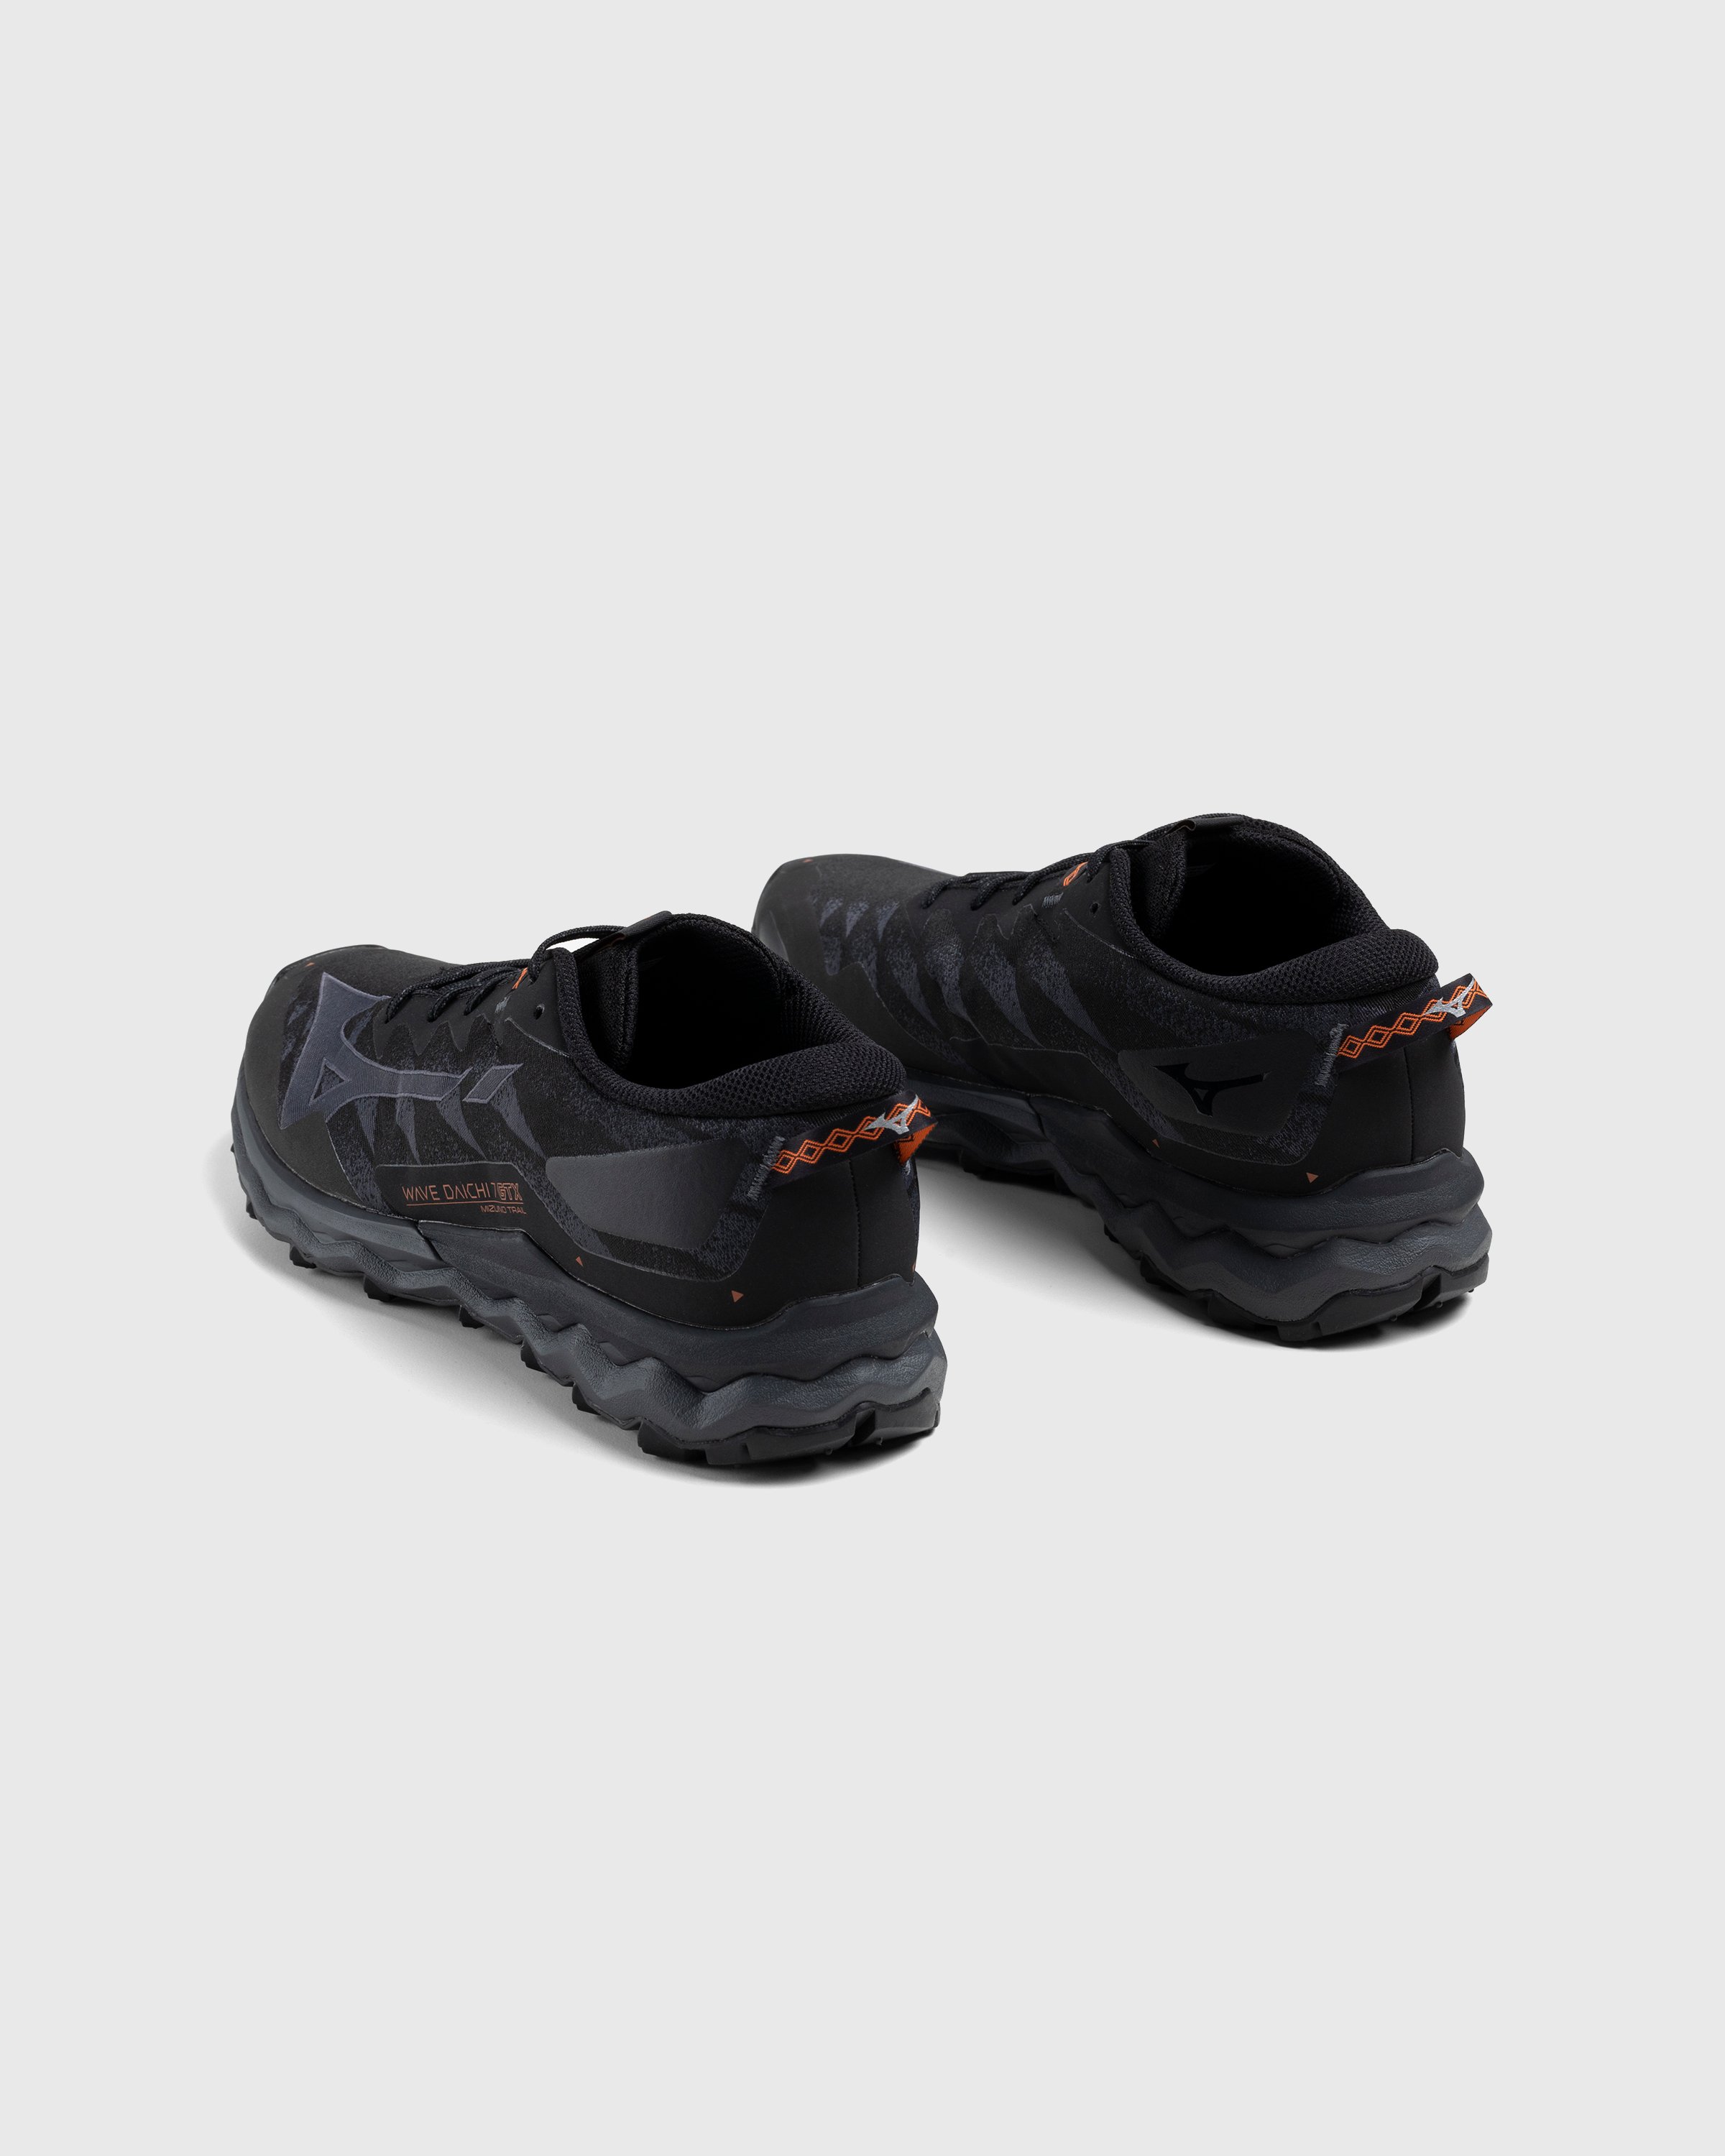 Mizuno - Wave Daichi 7 GTX Black/Iron Gate/Mecca Orange - Footwear - Black - Image 3